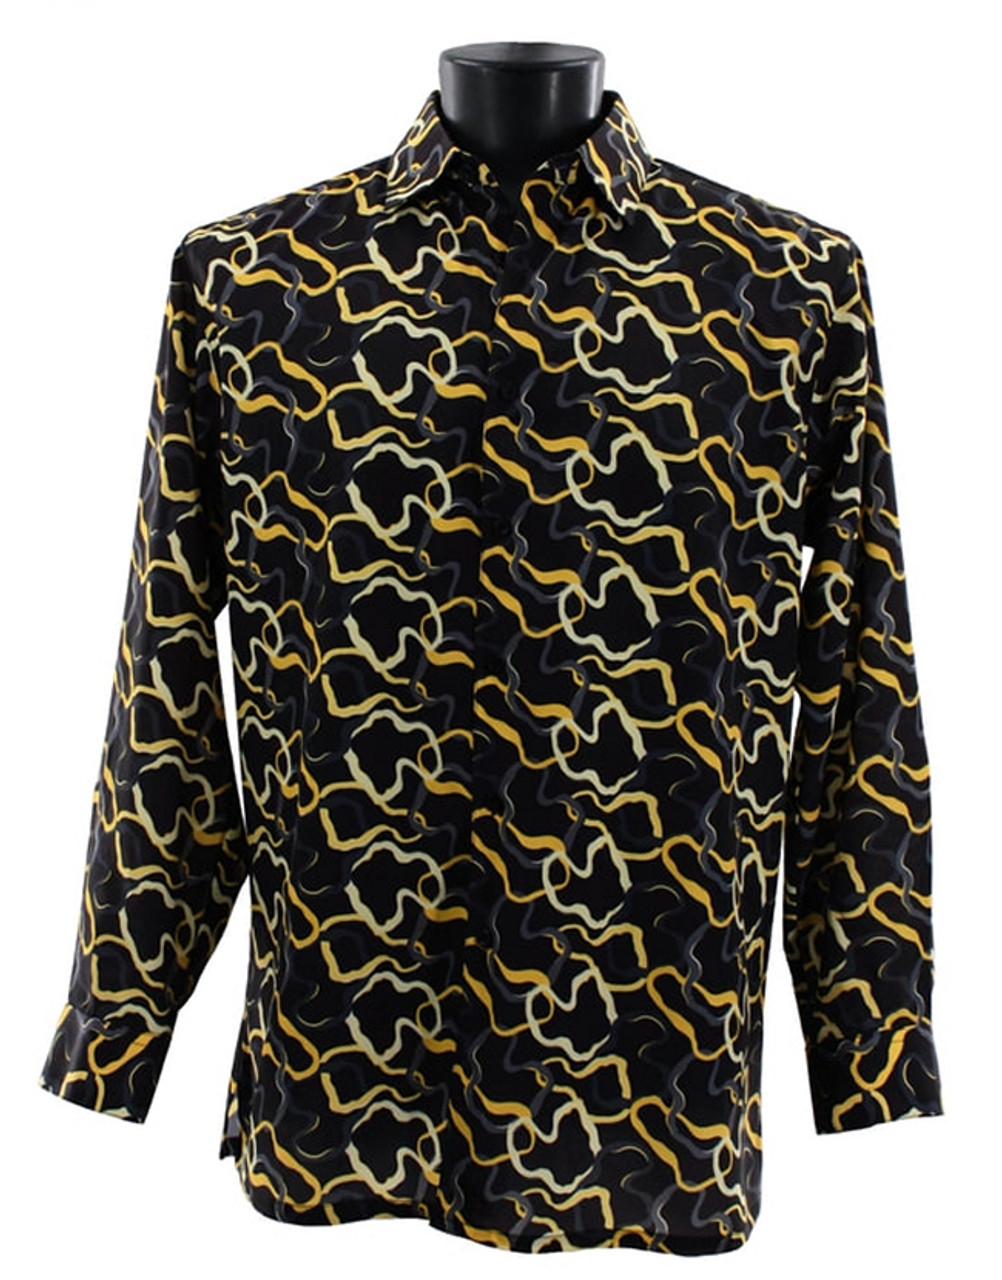 Bassiri Long Sleeve Camp Shirt - Black & Gold Squiggle Design - Vavra's ...